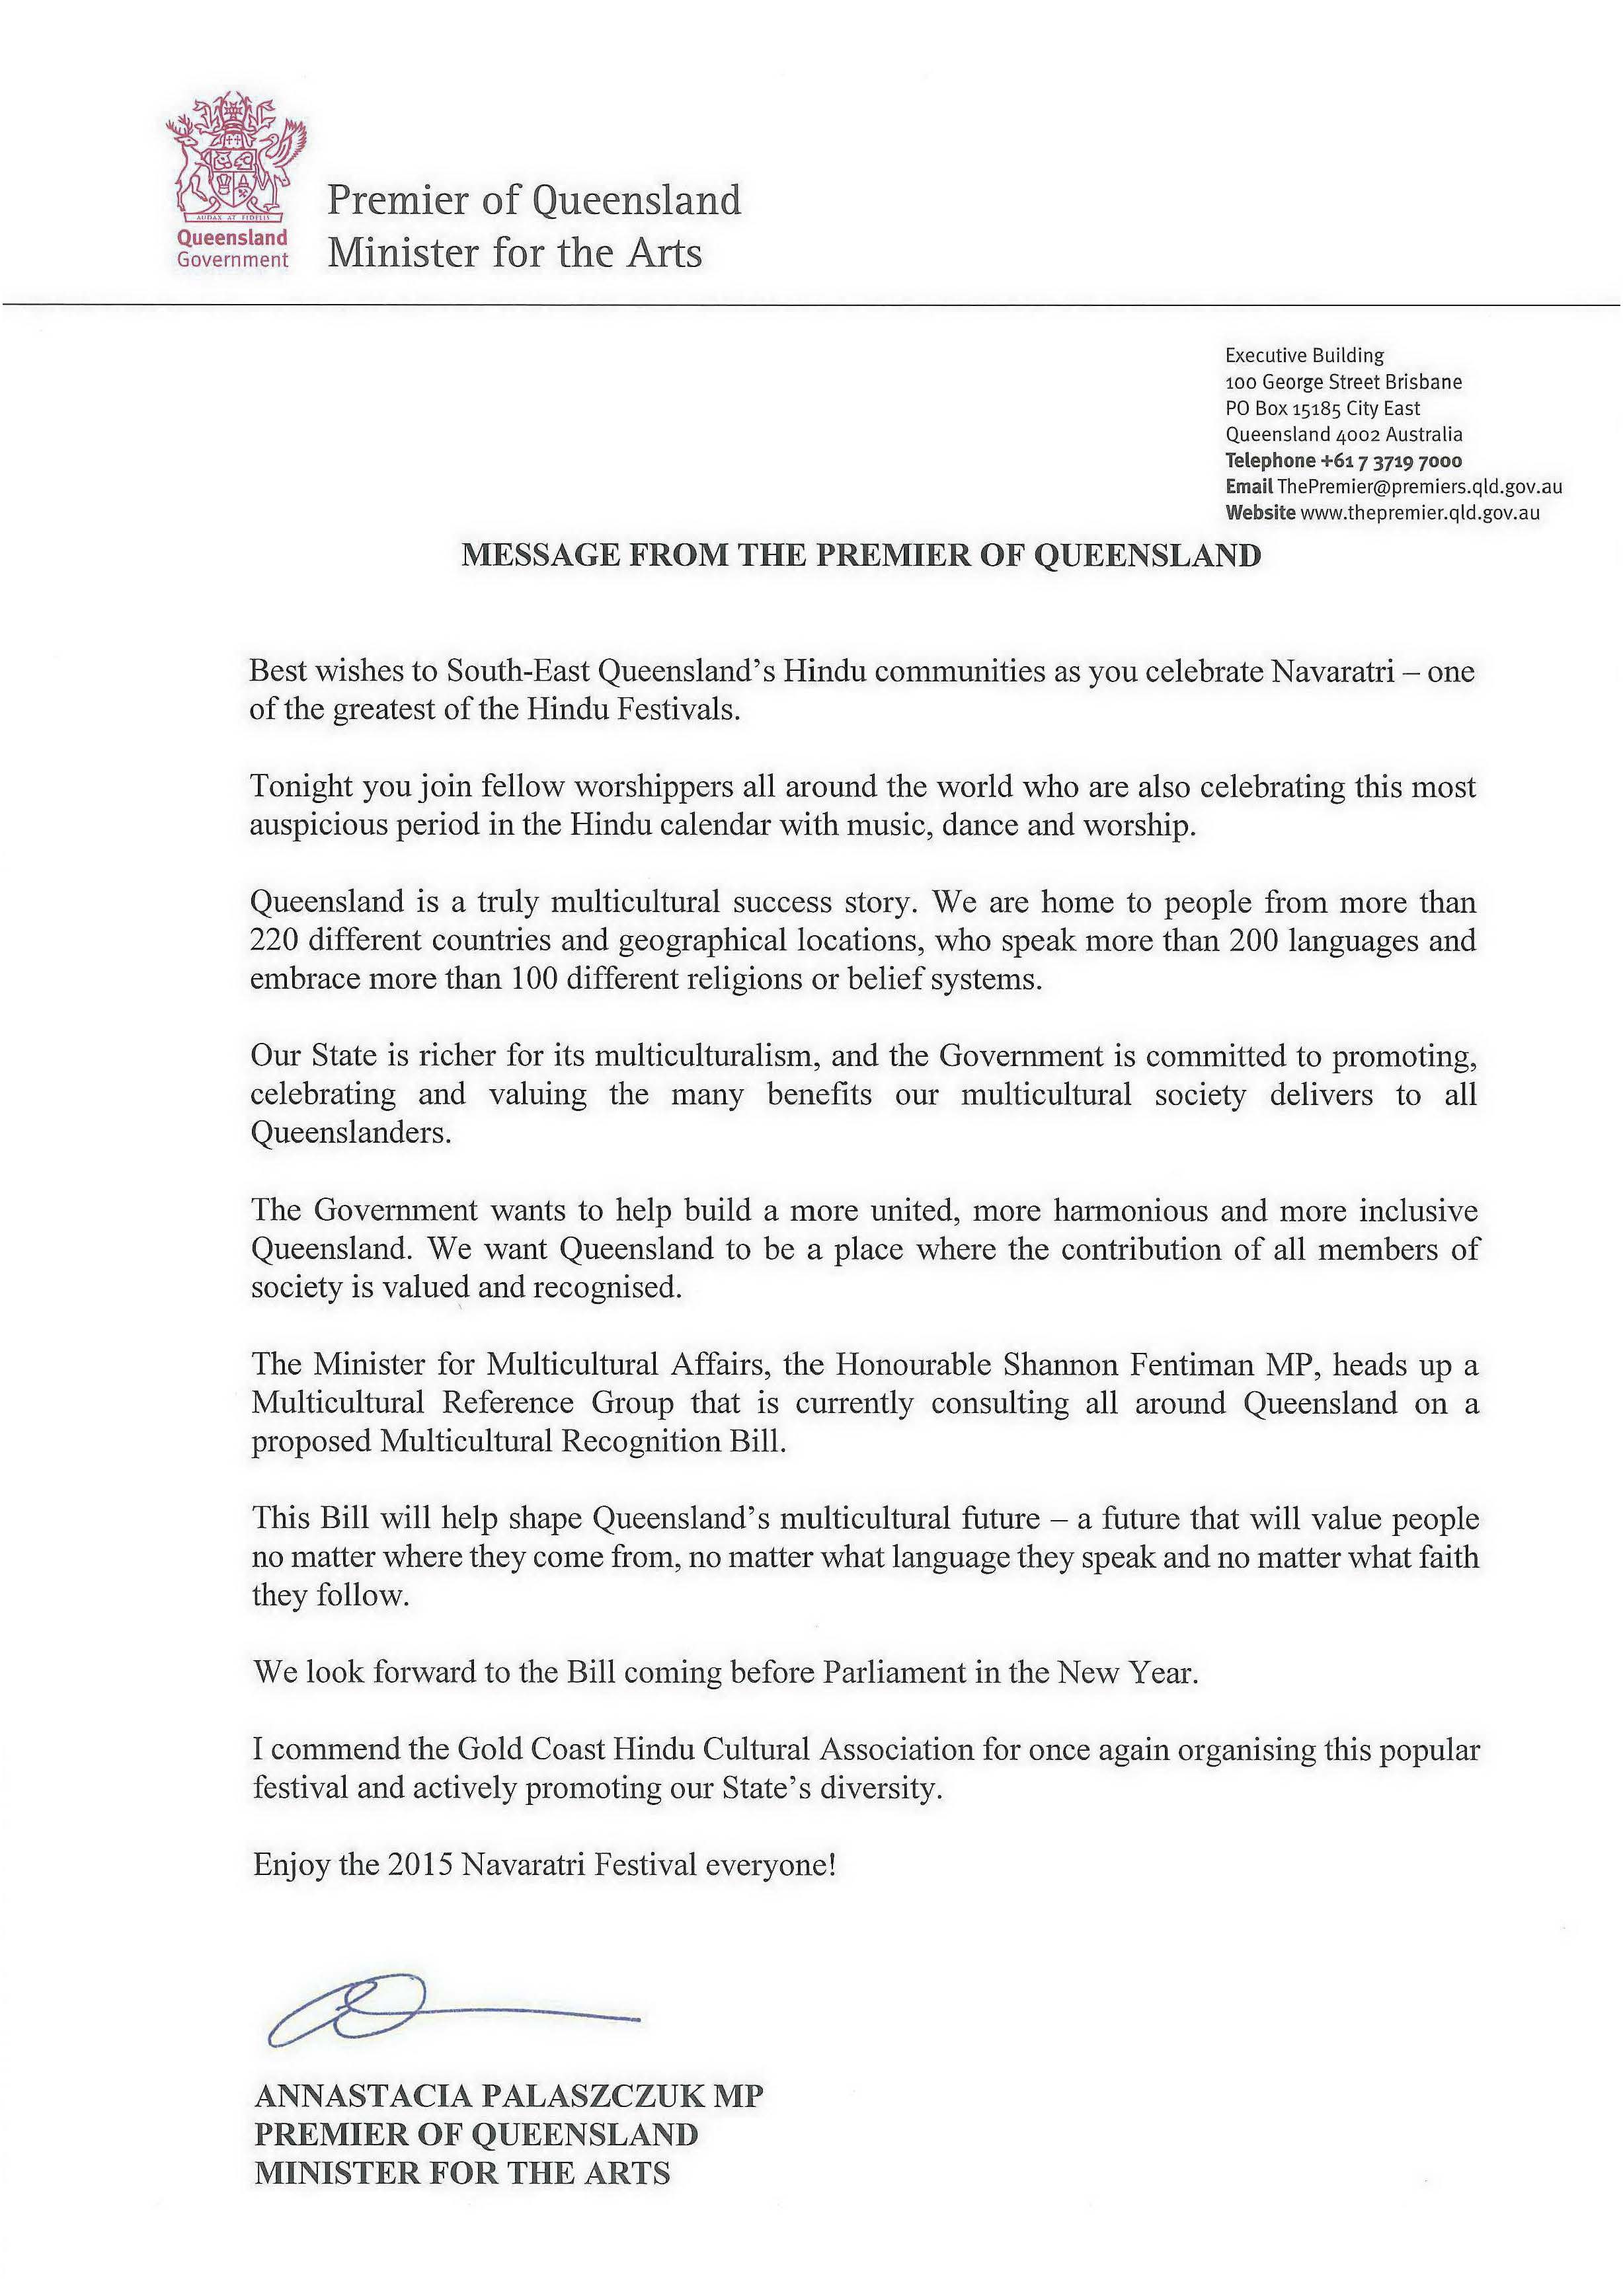 Letter Of Support - Premier of Queensland - Annastacia Palaszczuk MP